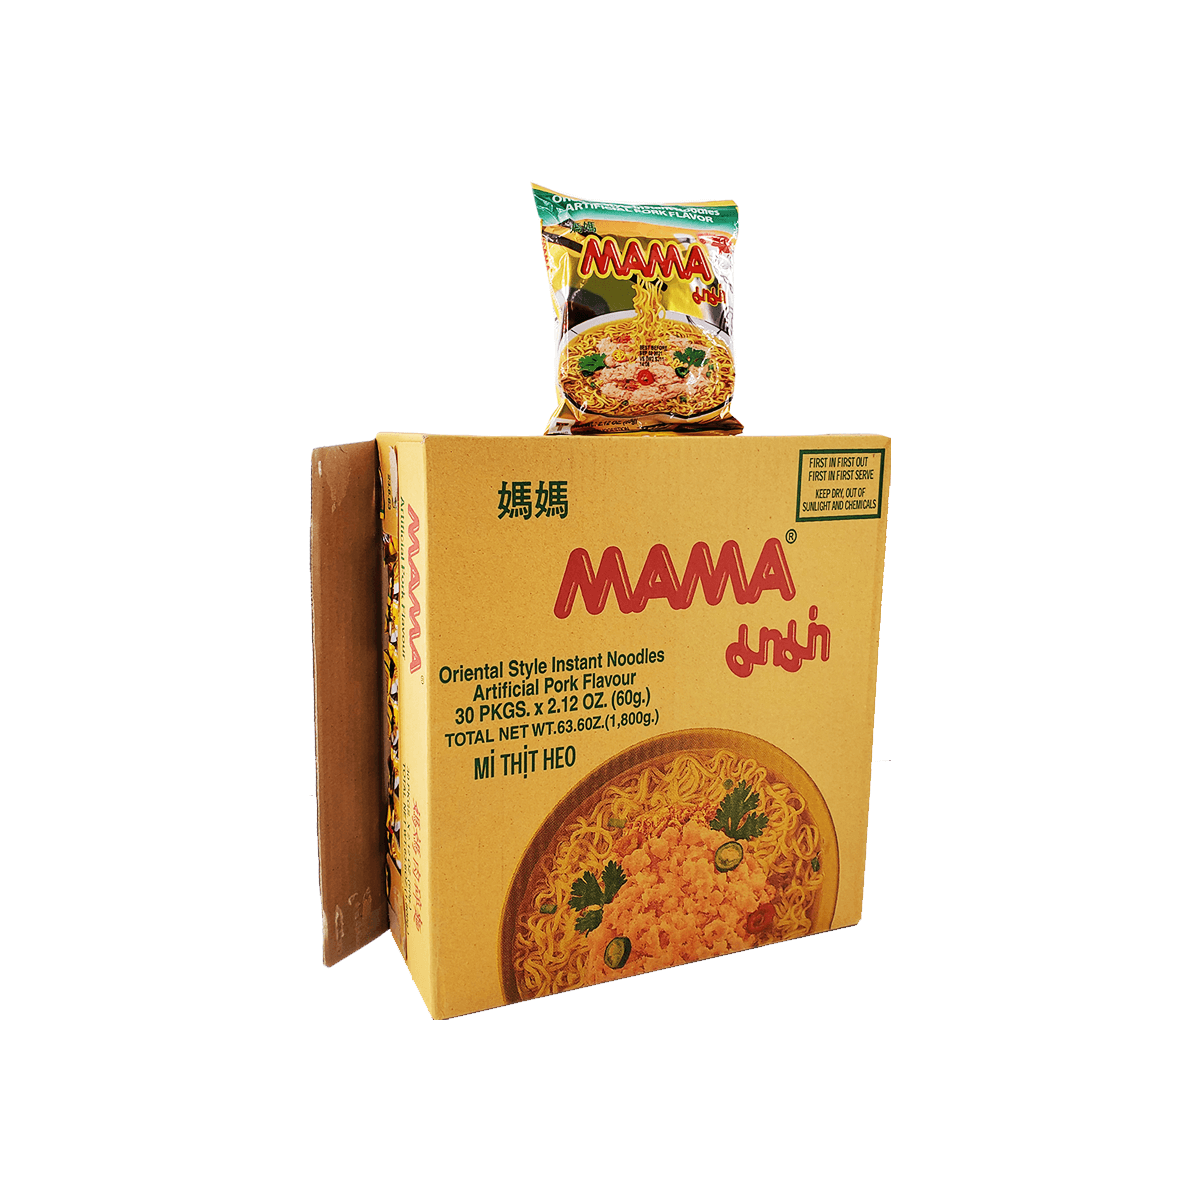 MAMA Instant Noodles Artificial Pork Flavor,30 Pkgs.x 2.12 Oz.(60g